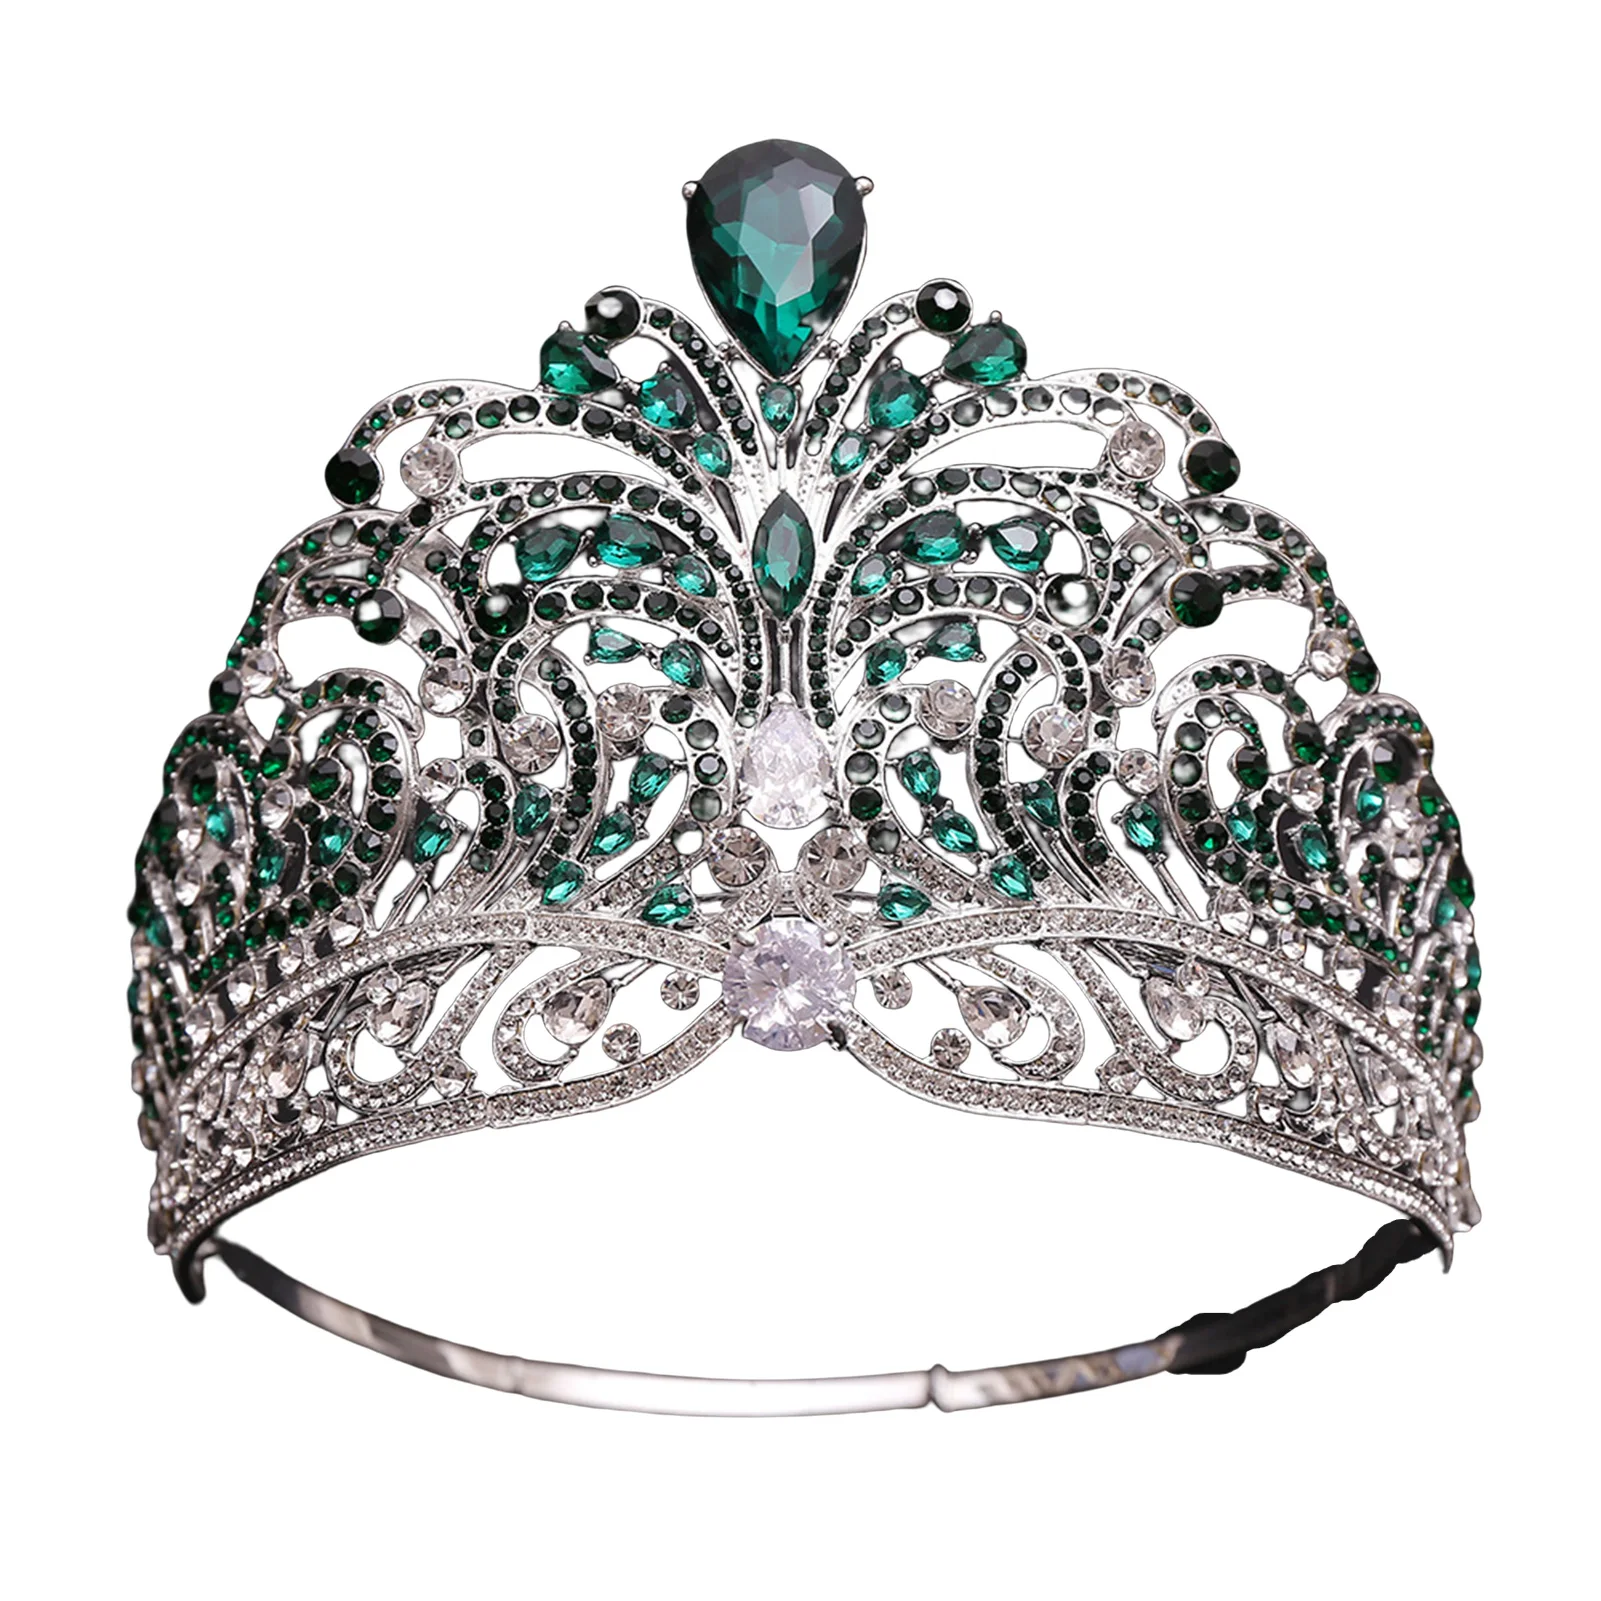 

Luxurious Wedding Tiara Crown Sparkly Rhinestones Hair Accessories Adjustable Tiara for Bride Bridesmaid Princess Costume